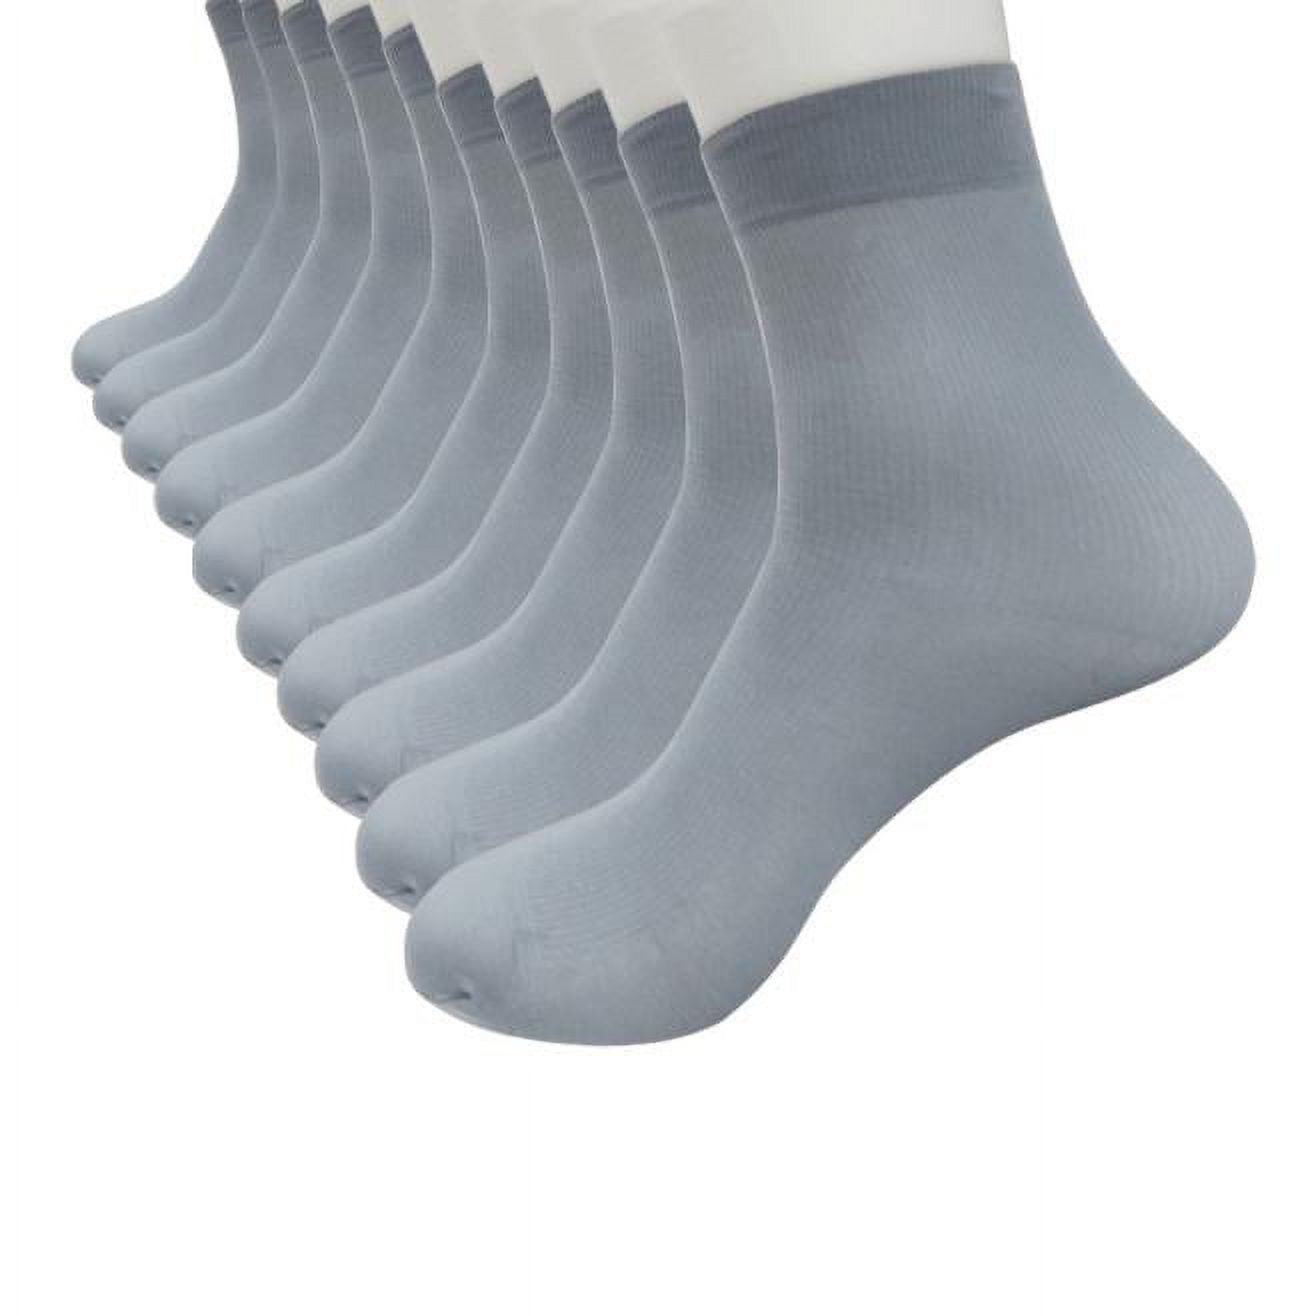 Hanes Originals Men's Crew Socks, Moisture Wicking, 6-Pair Pack 